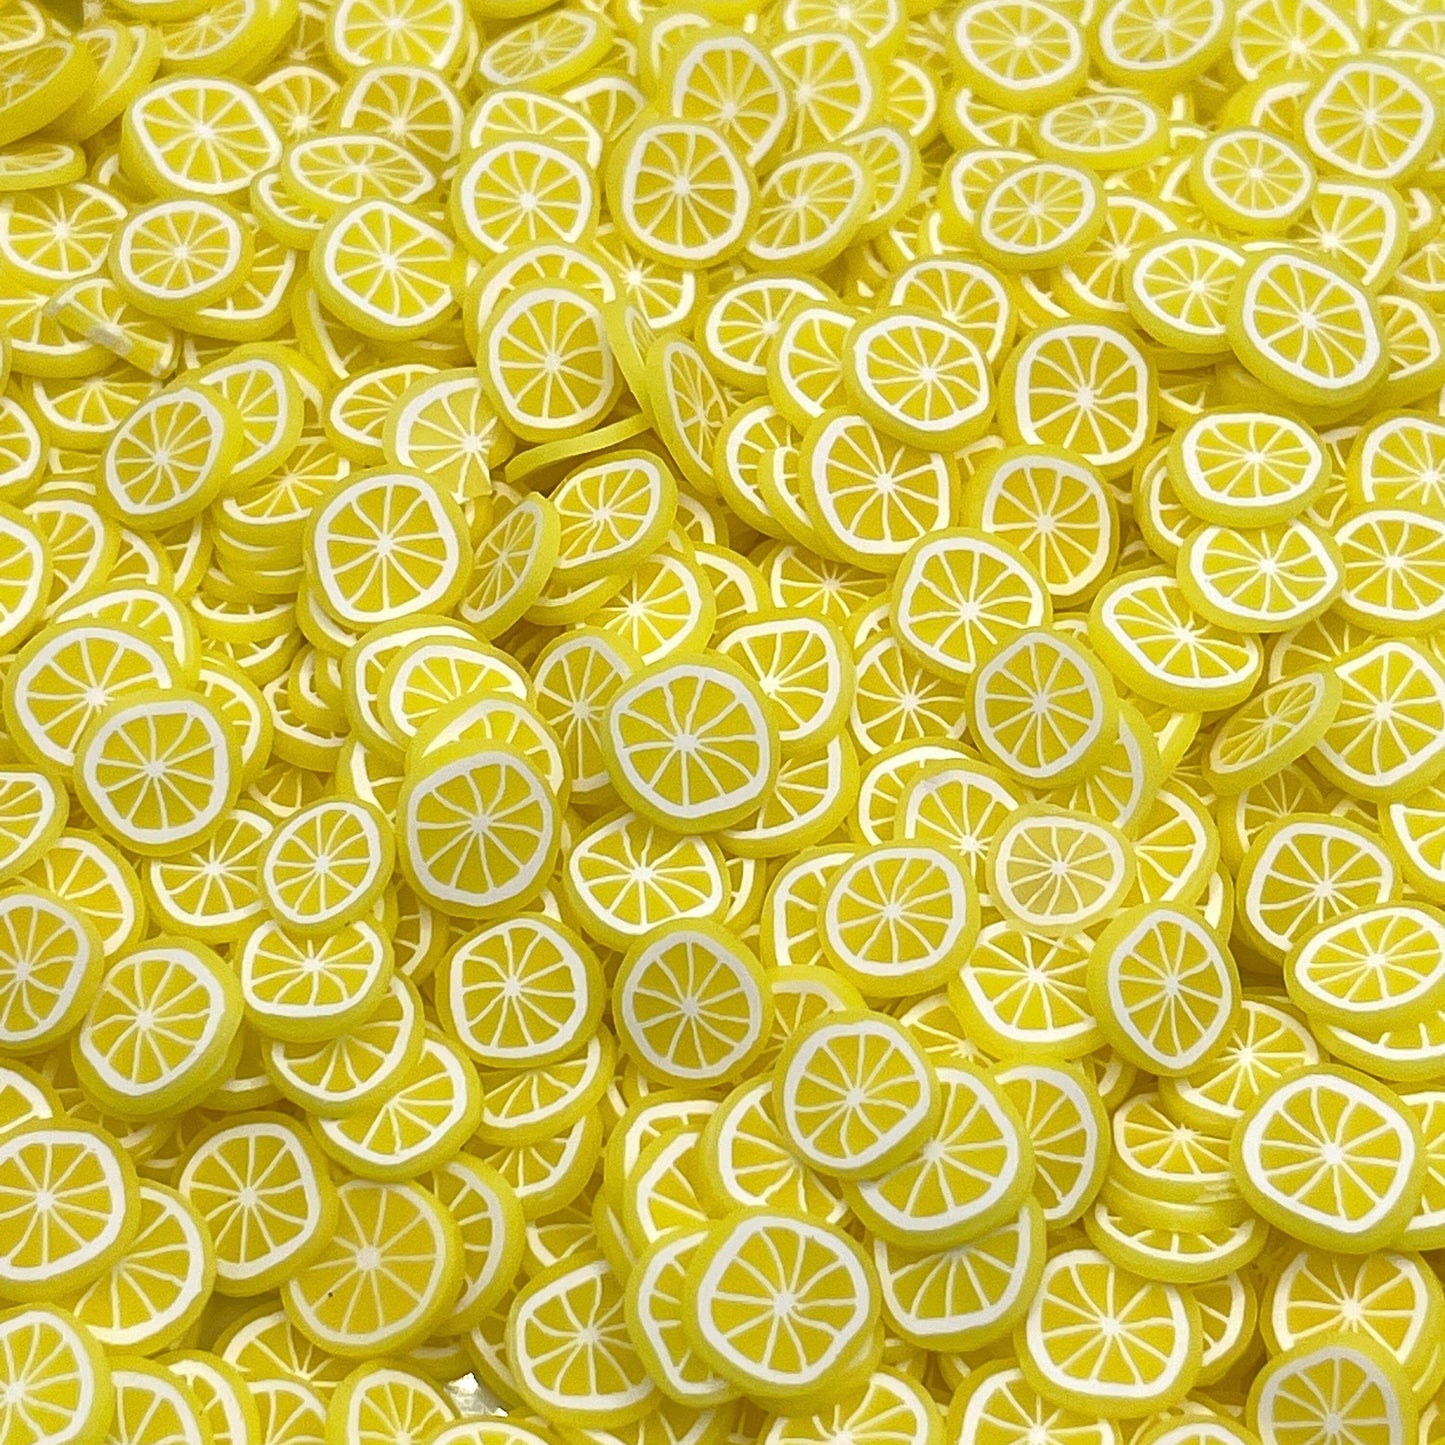 FAKE 5MM/10MM Yellow Lemon Slice Fruit Polymer Clay Sprinkle (NOT EDIBLE)